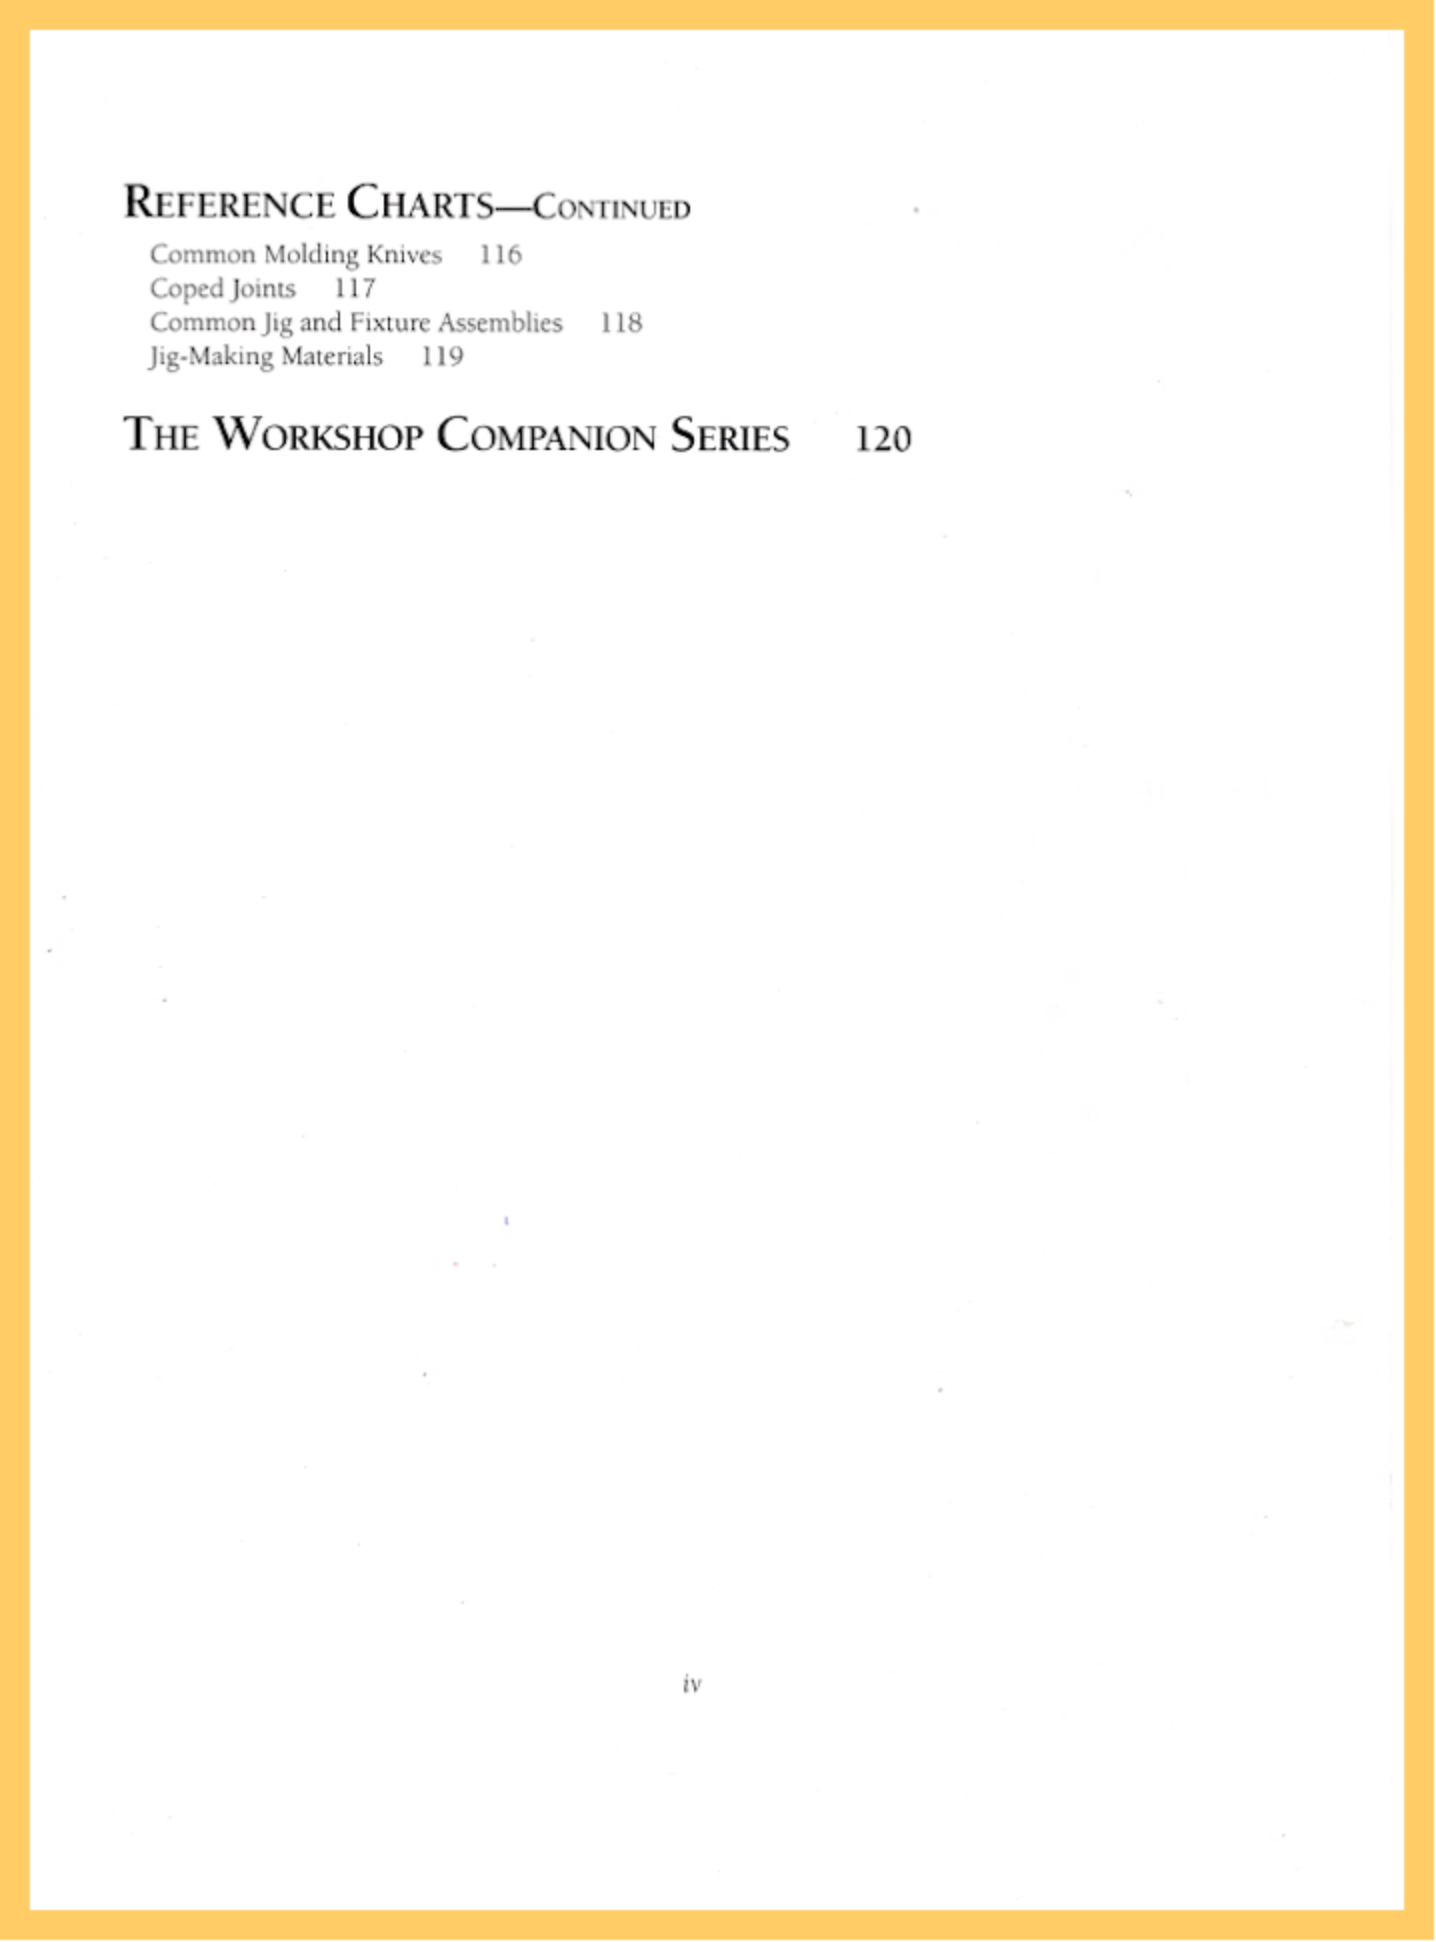 Complete Index & Shop Manual